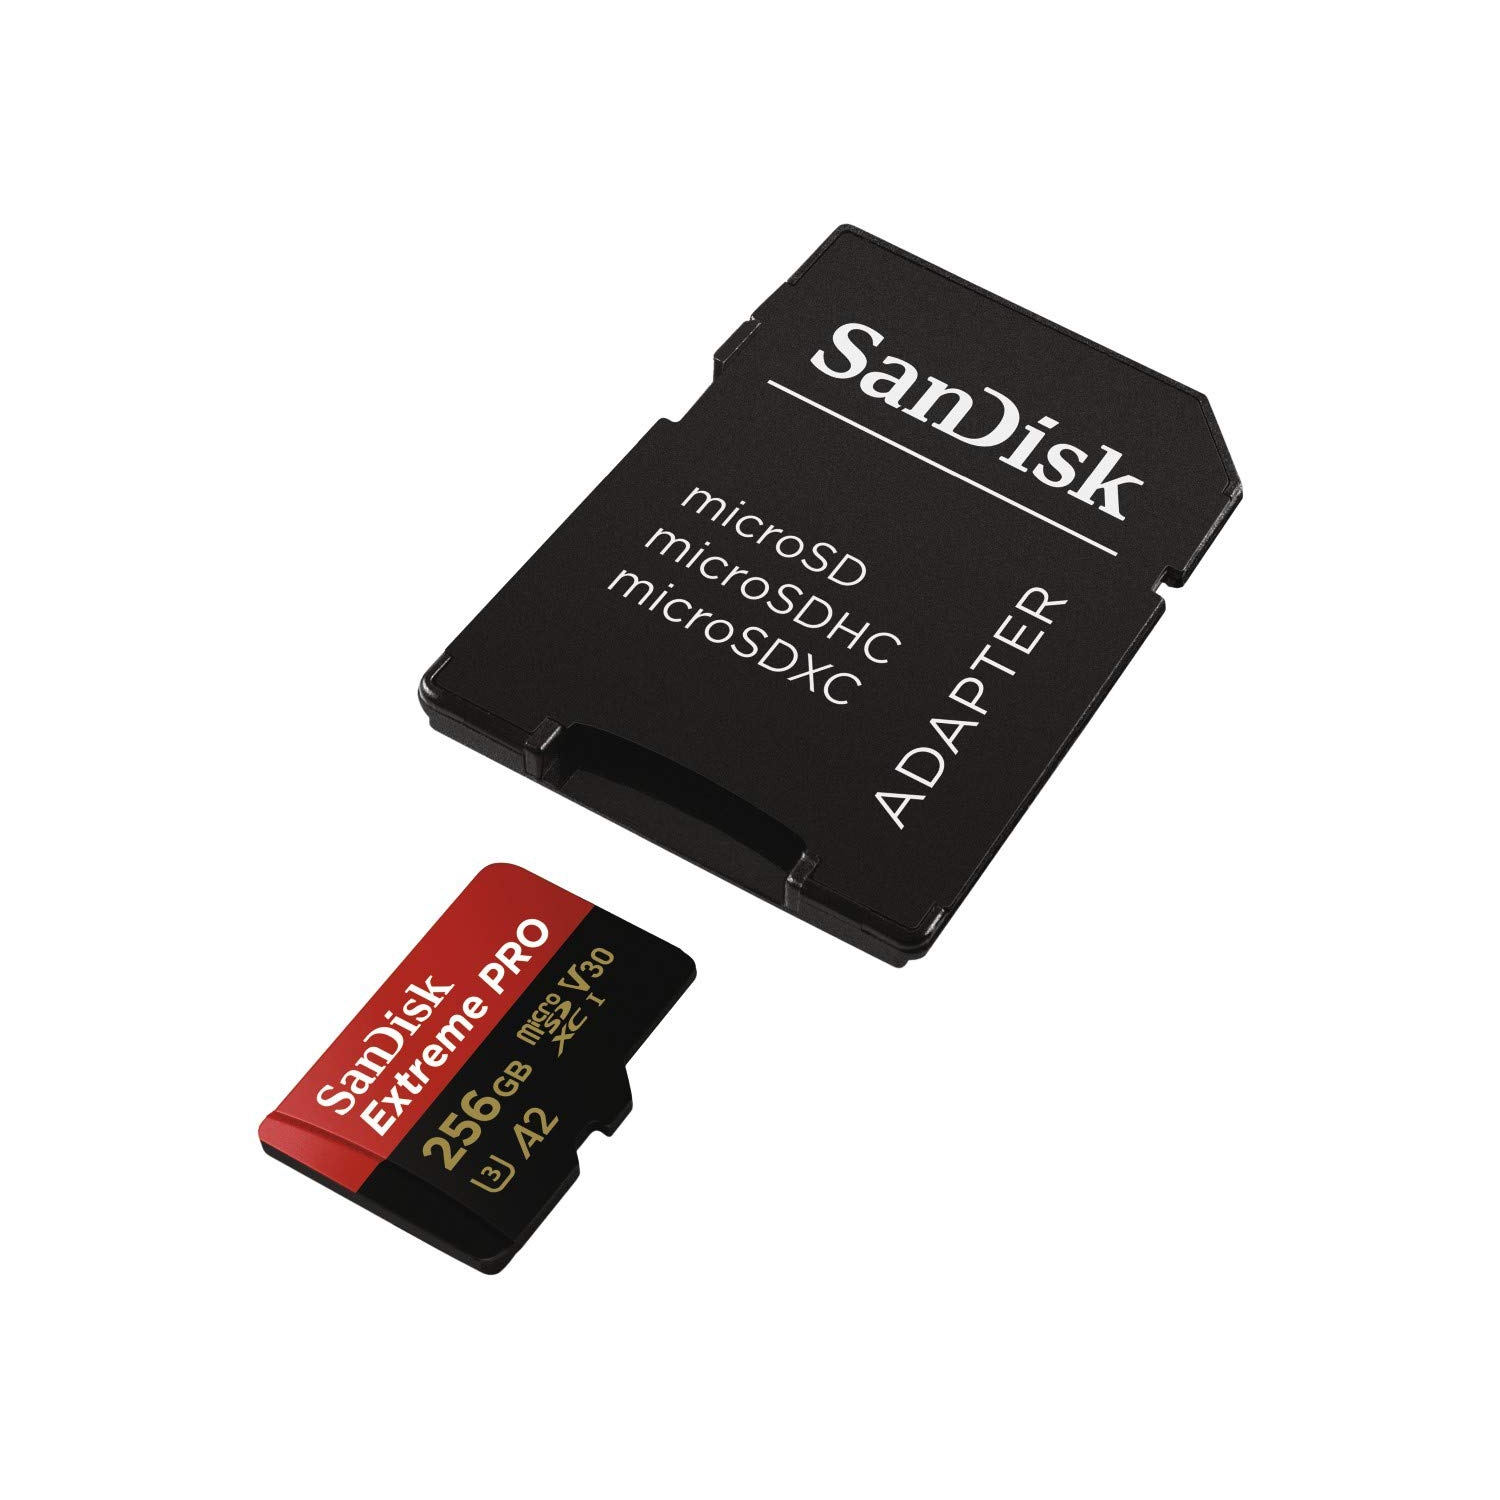 La grande vitesse 256 Go de carte mémoire Micro SD de classe 10 - Chine  26Go Carte Micro SD et carte mémoire de 256 Go prix